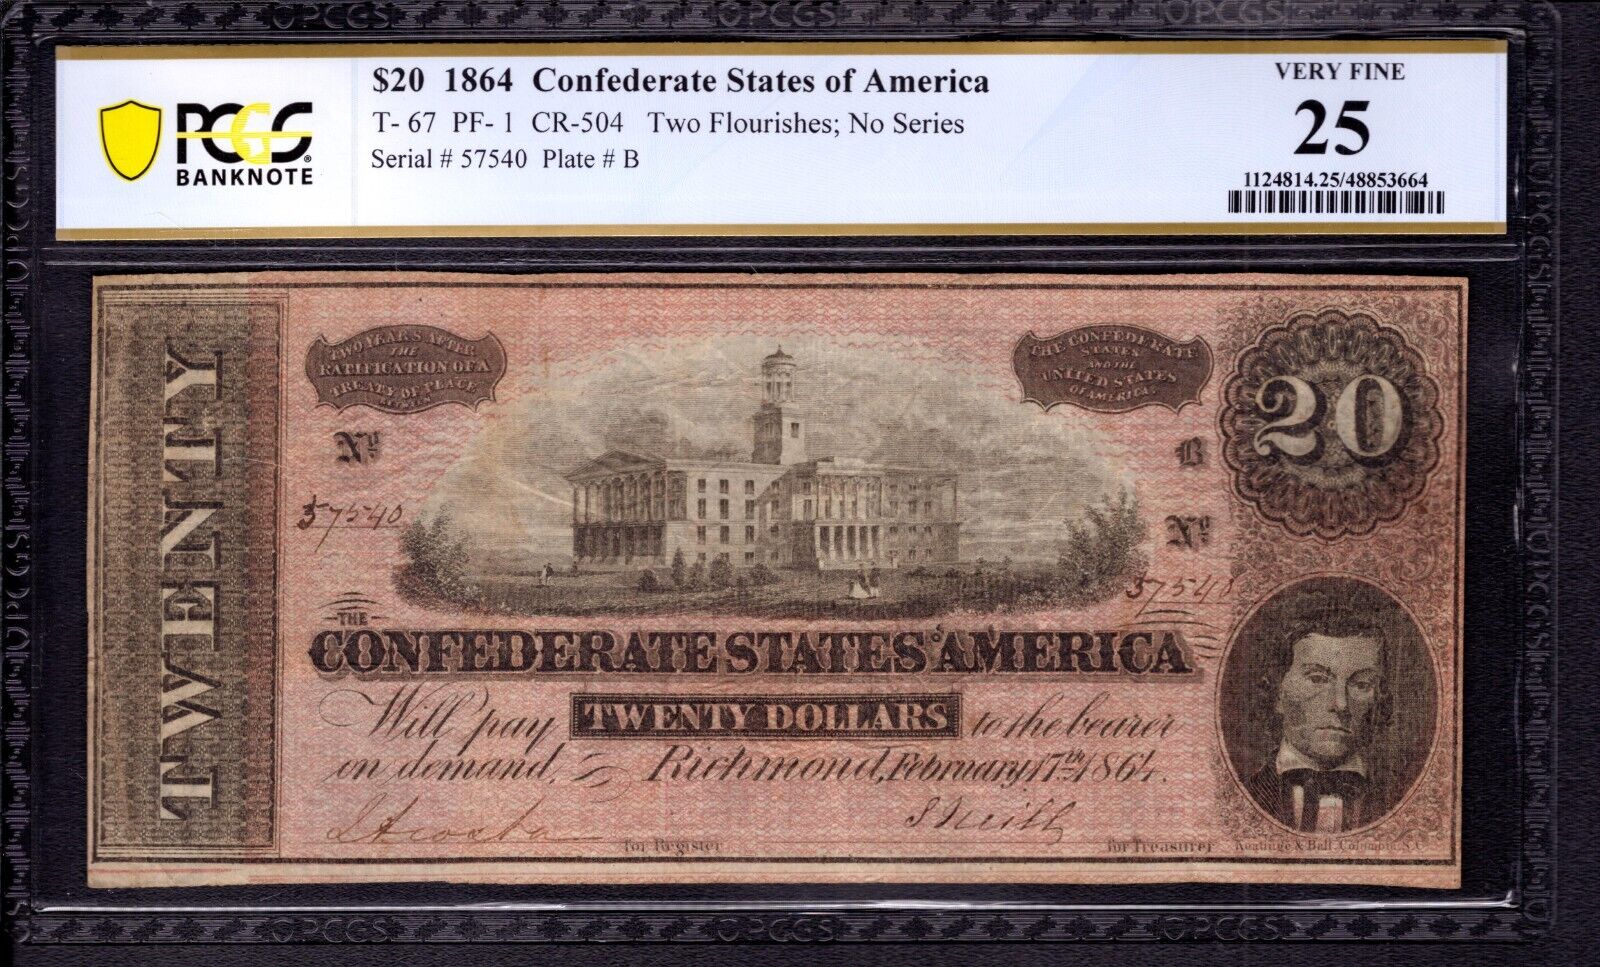 1864 $20 CONFEDERATE STATES OF AMERICA NOTE T-67 PF-1 PCGS B VERY FINE VF 25